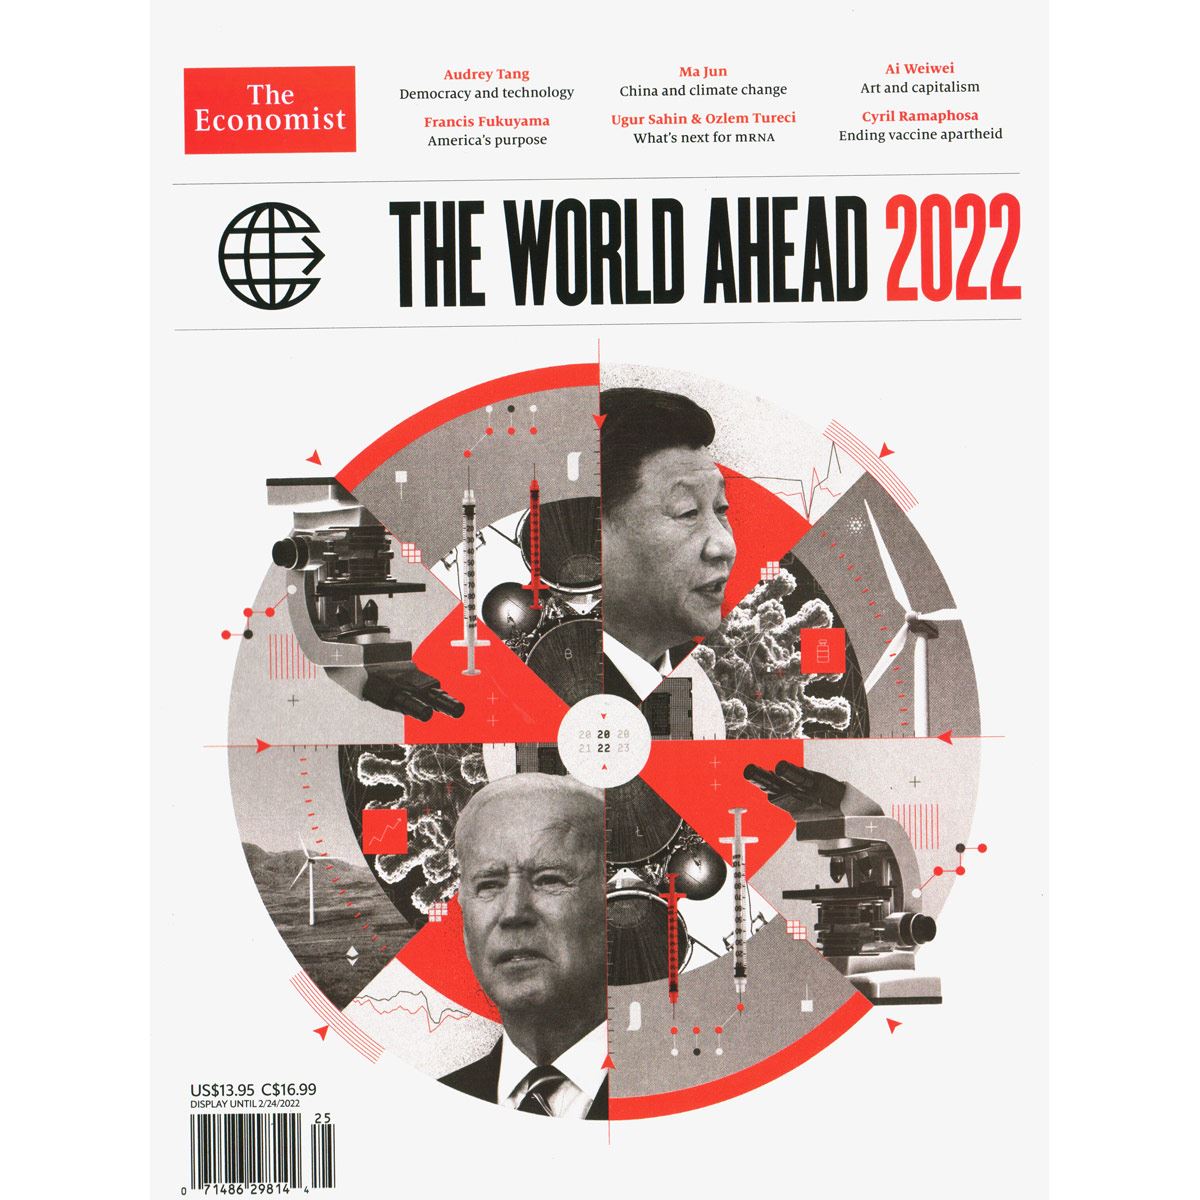 The economist World ahead